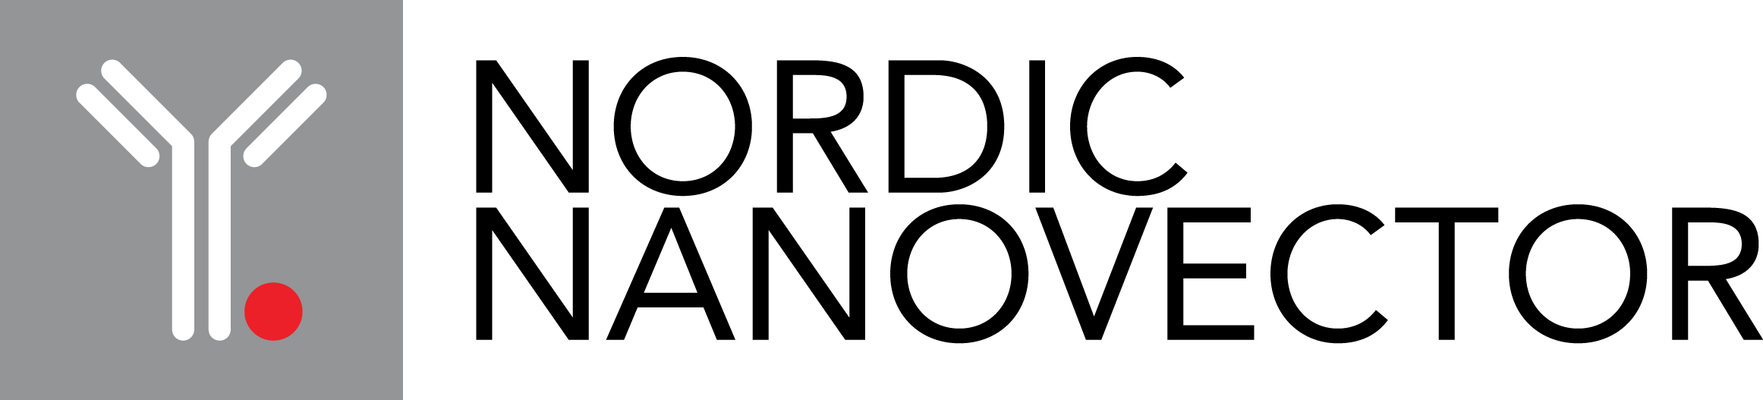 Profile image for Nordic Nanovector